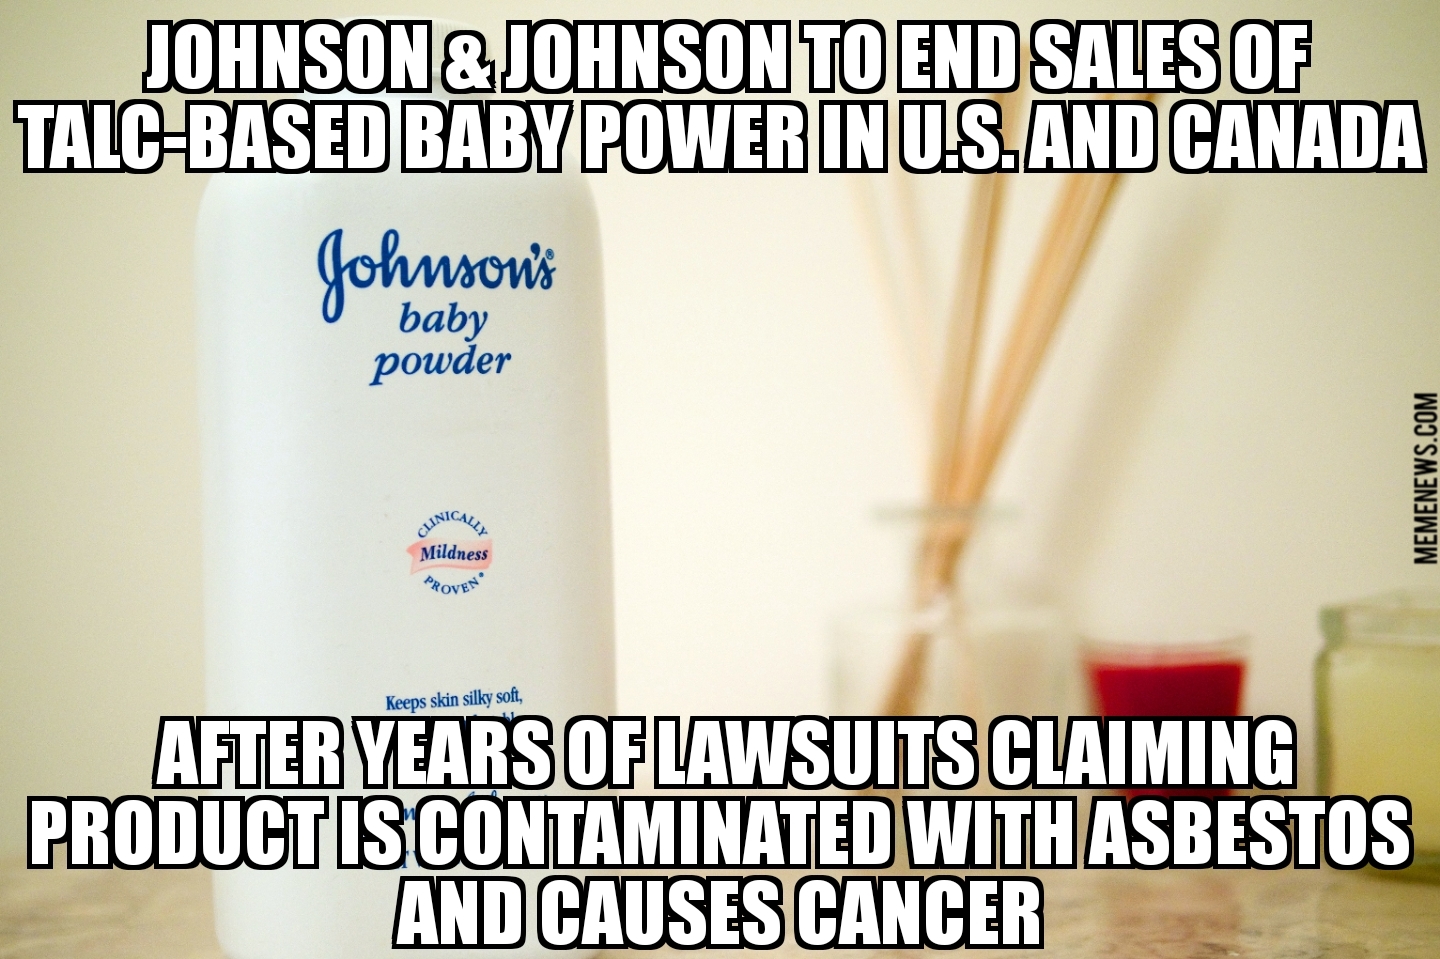 Johnson & Johnson to end talc-based baby powder sales